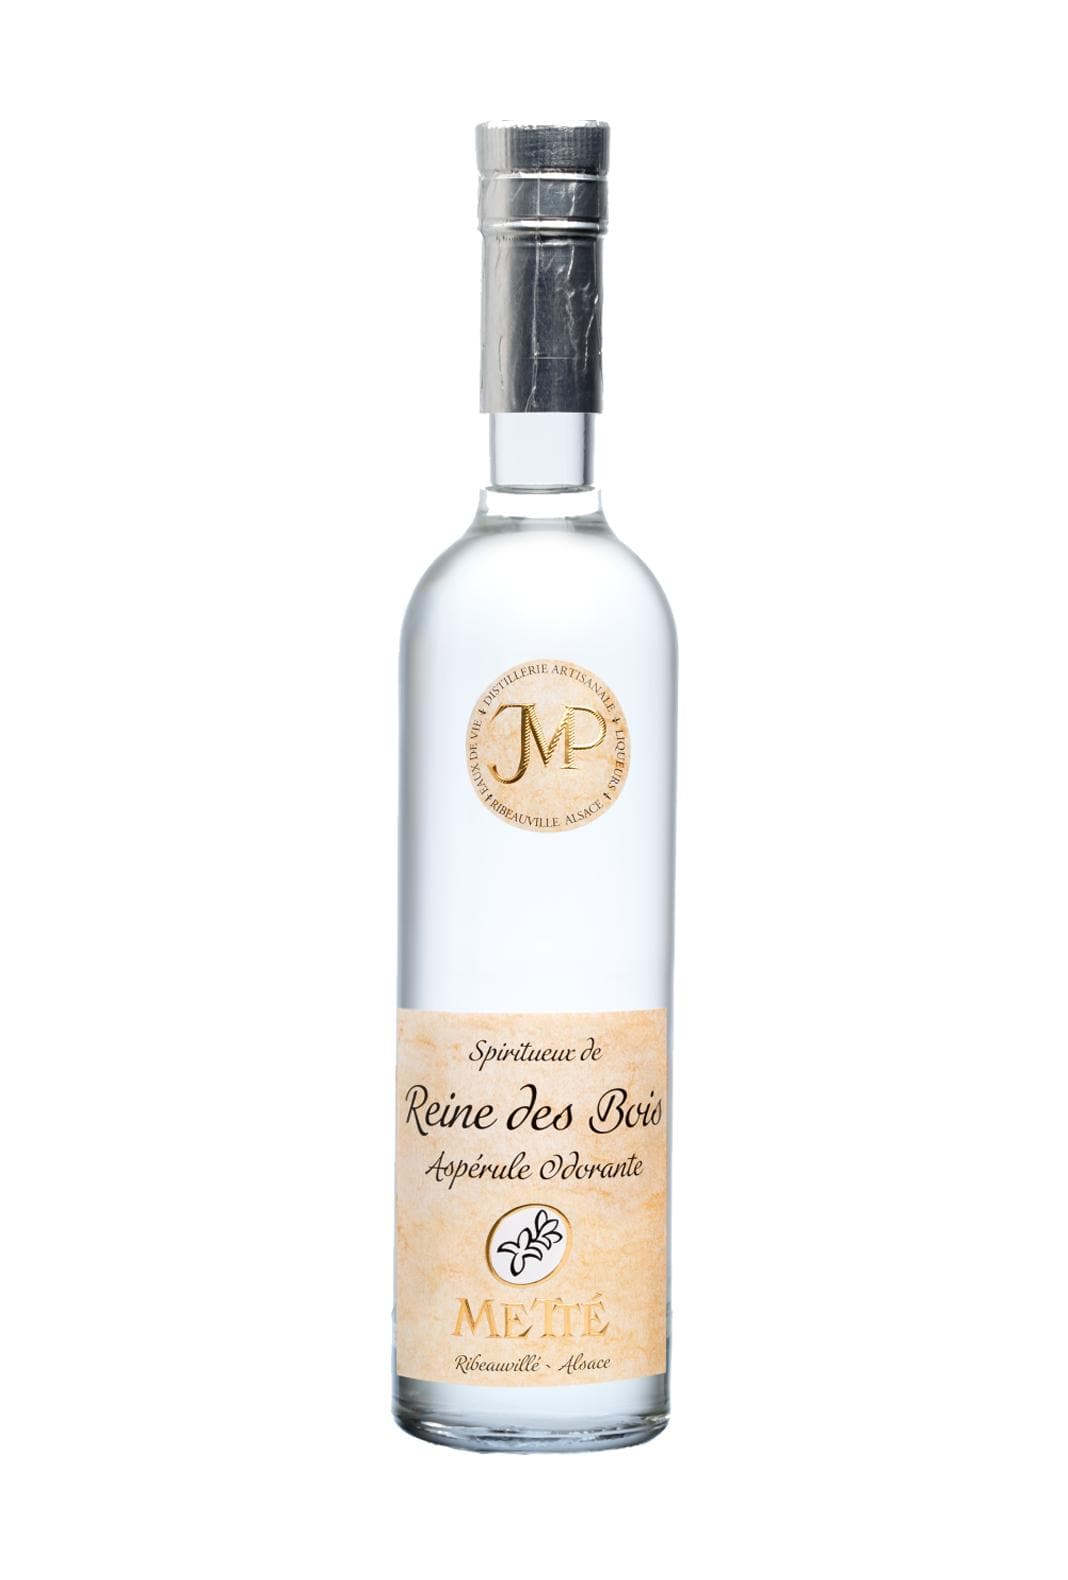 Mette Eau de Vie Asperule Odorante - Reine des Bois (Sweetscented Bedstraw spirit) 45% 350ml | Liquor & Spirits | Shop online at Spirits of France